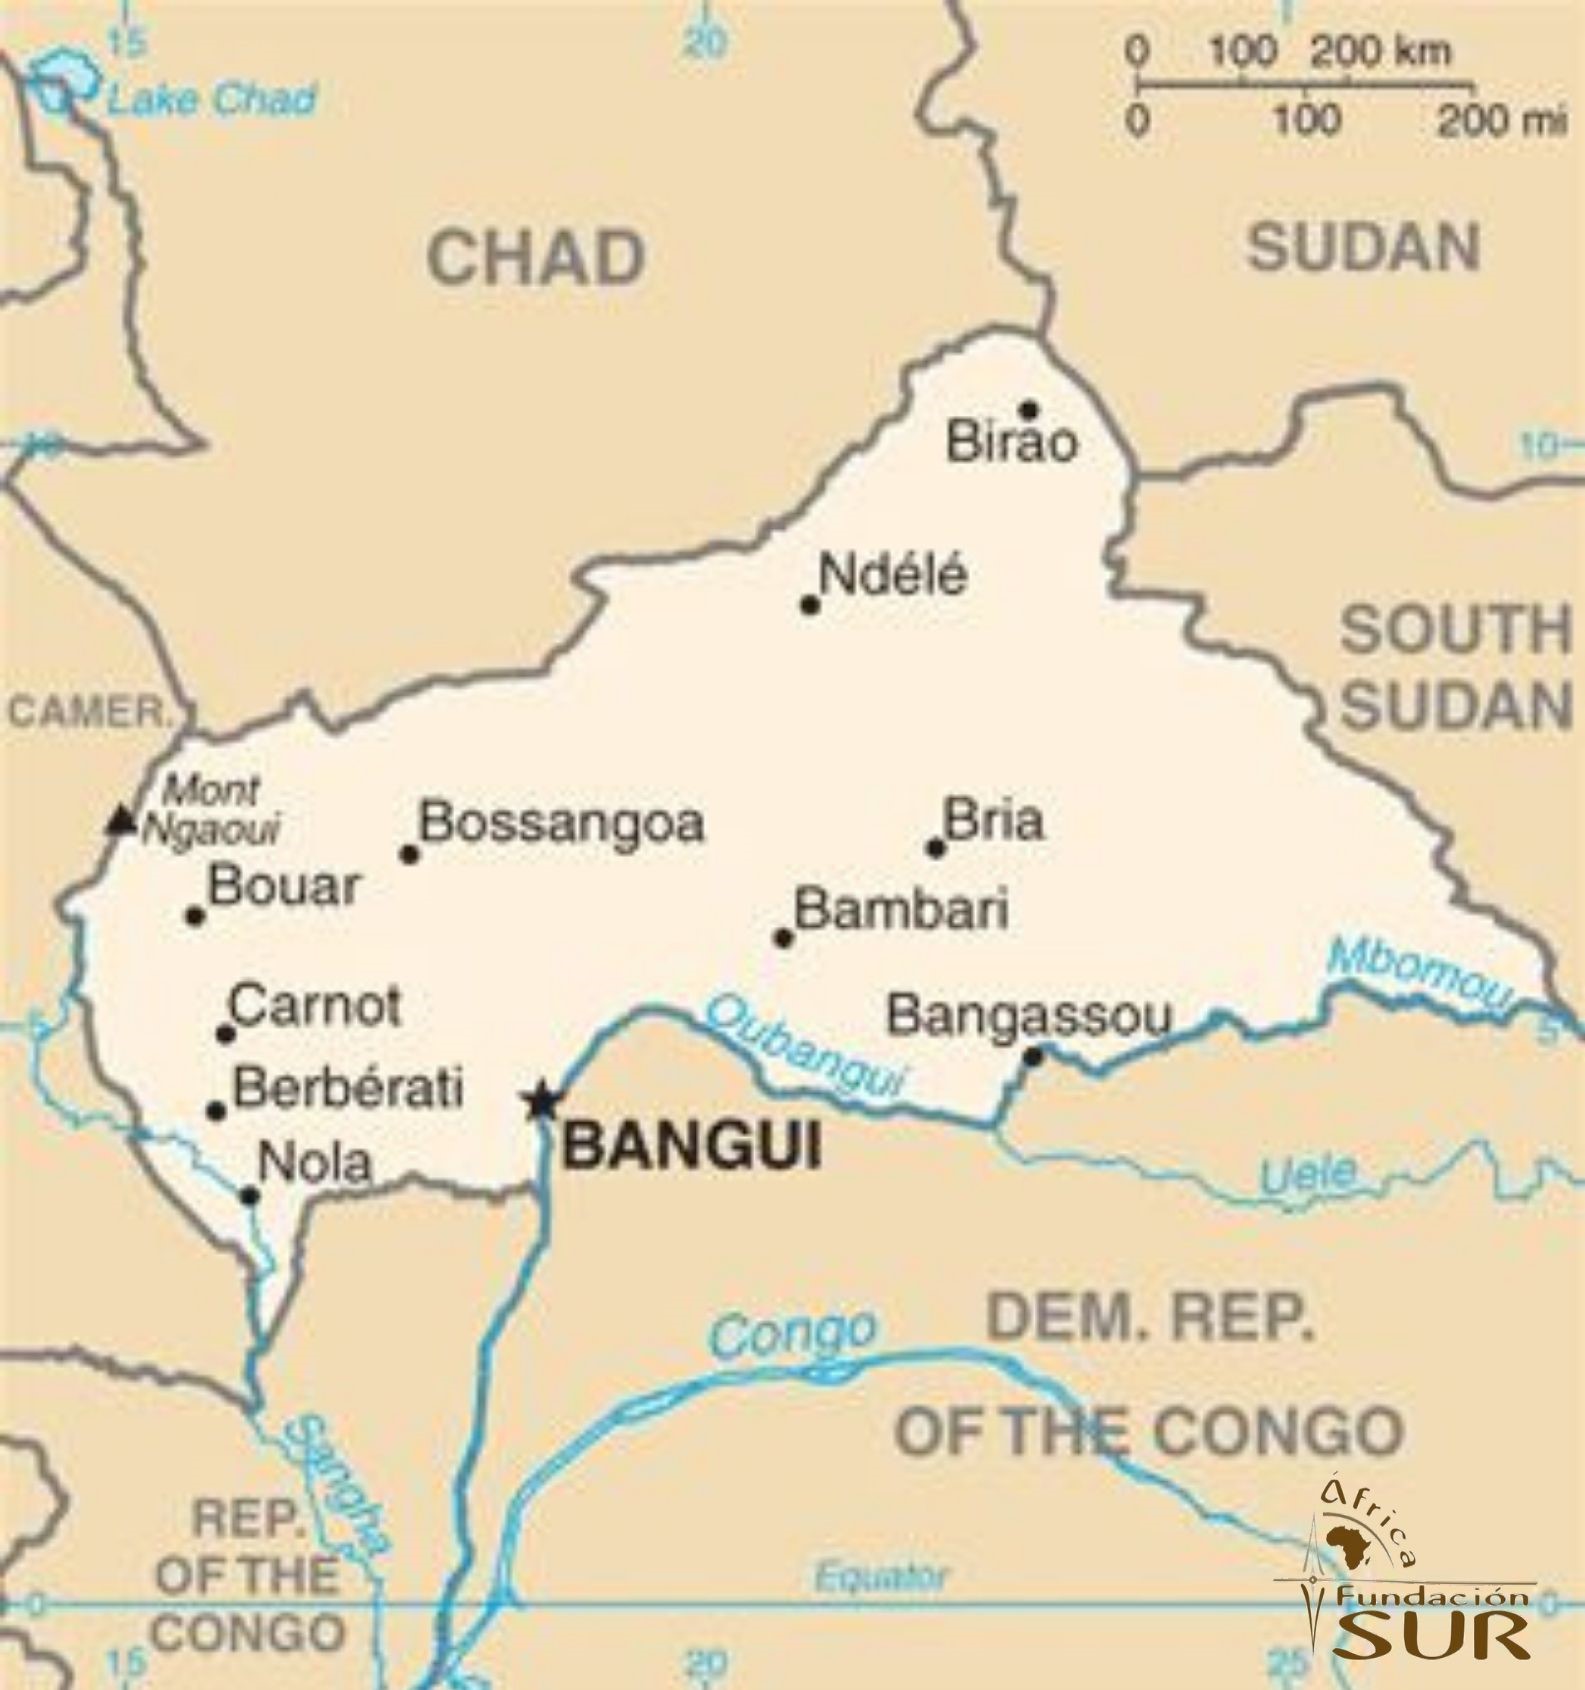 mapa_republica_centroafricana_mapa_cc0-4.jpg